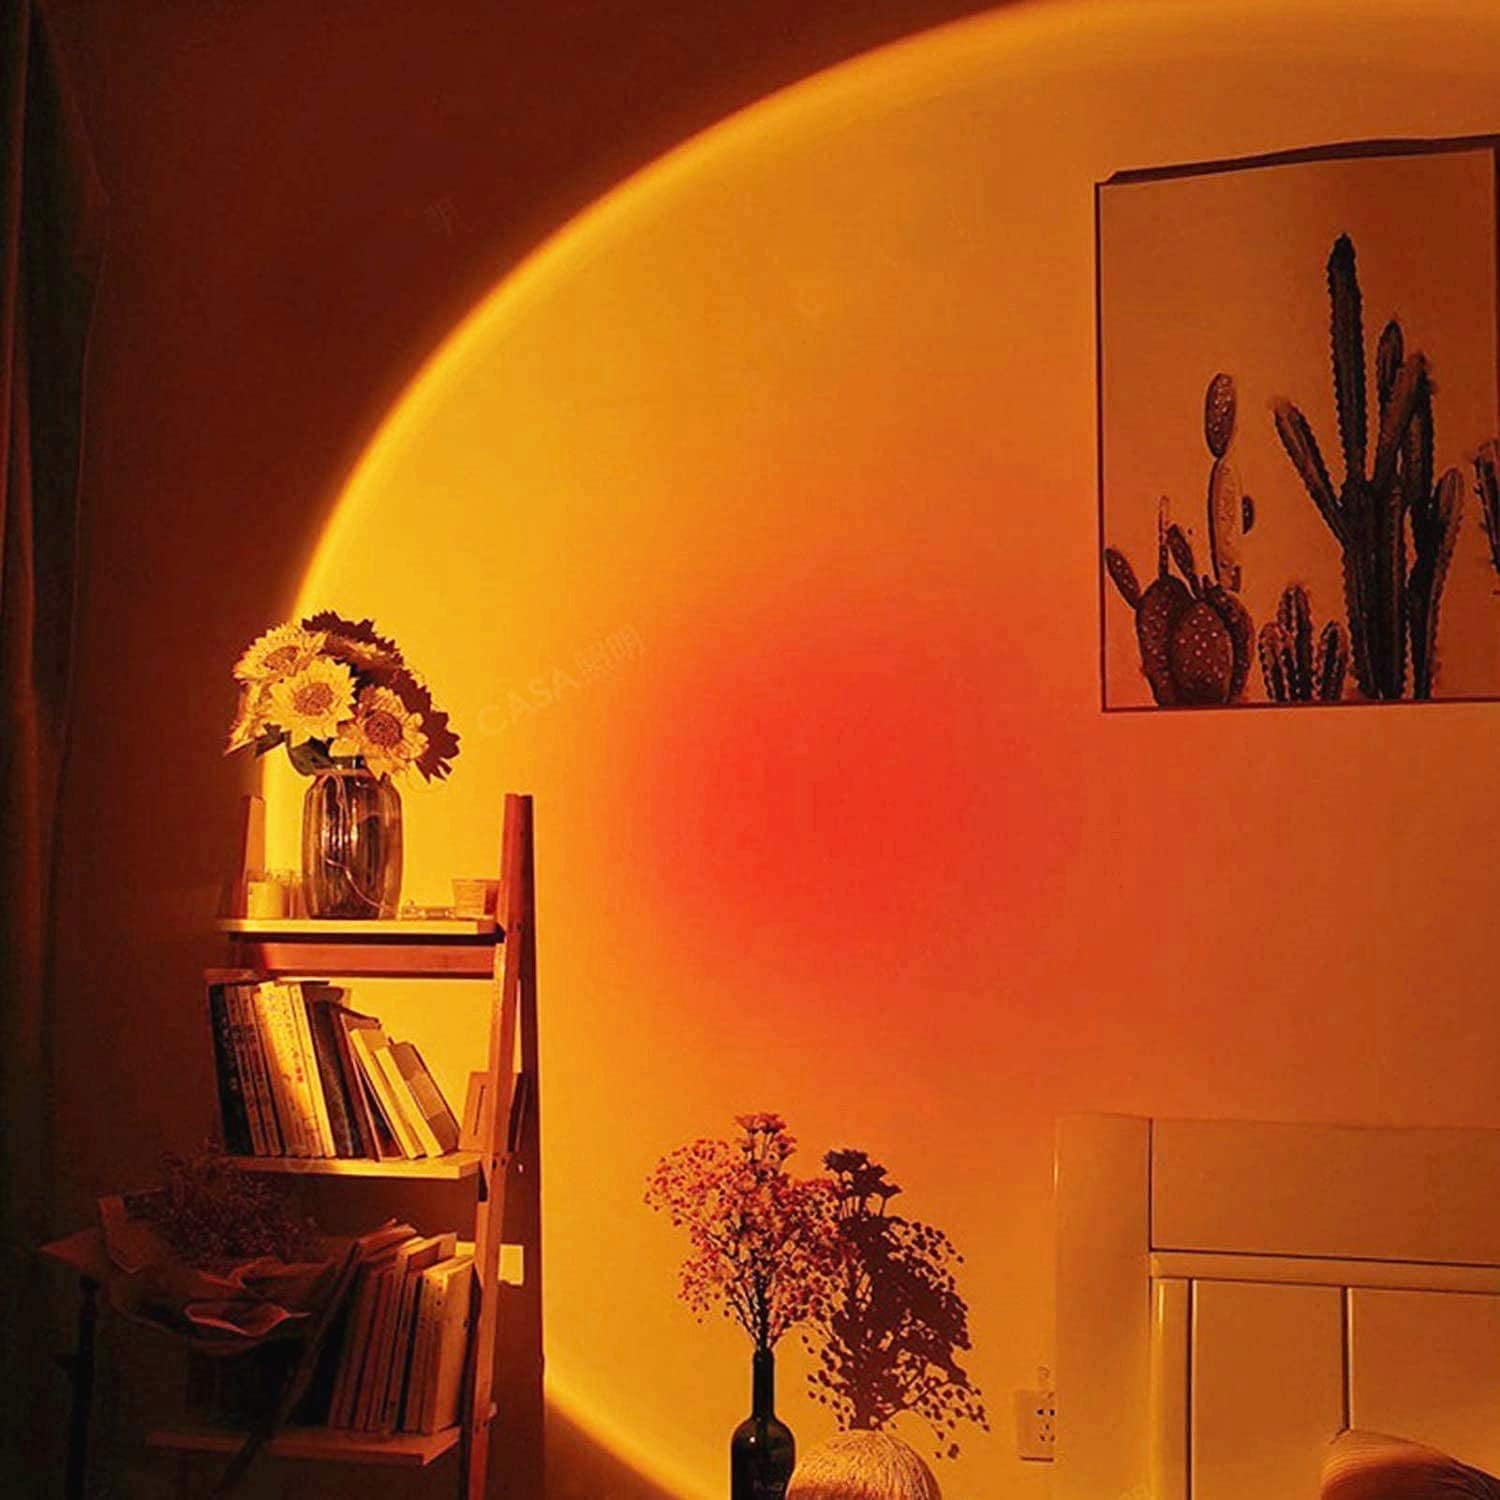 Sunset Lamp Projection Sunset Lamp Projector, Night Light Romantic Visual  Ambient Light TikTok Popular Light for Photography, 360 Degree Rotation